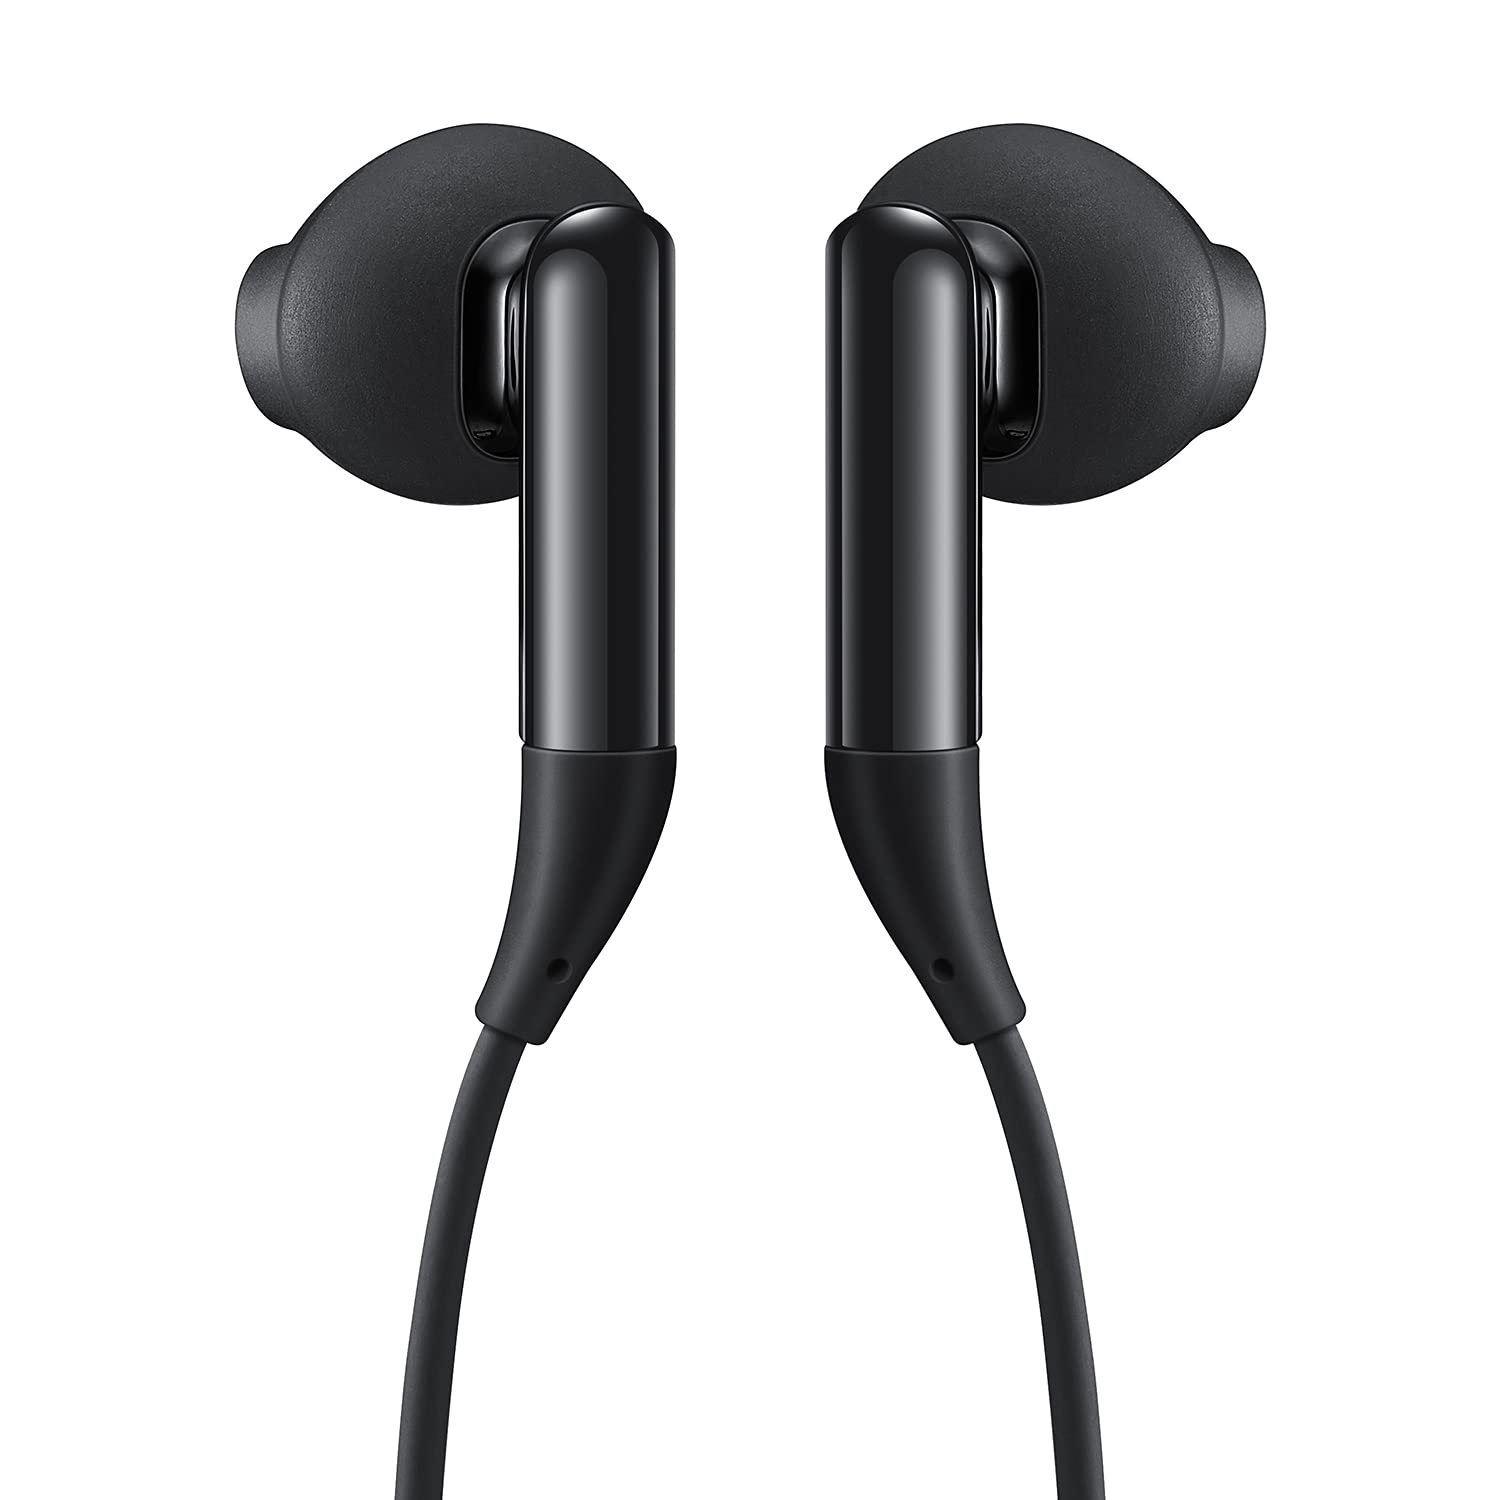 Samsung Level U2 (Black)- Original Bluetooth in Ear Wireless Stereo Headset with Mic - Mahajan Electronics Online